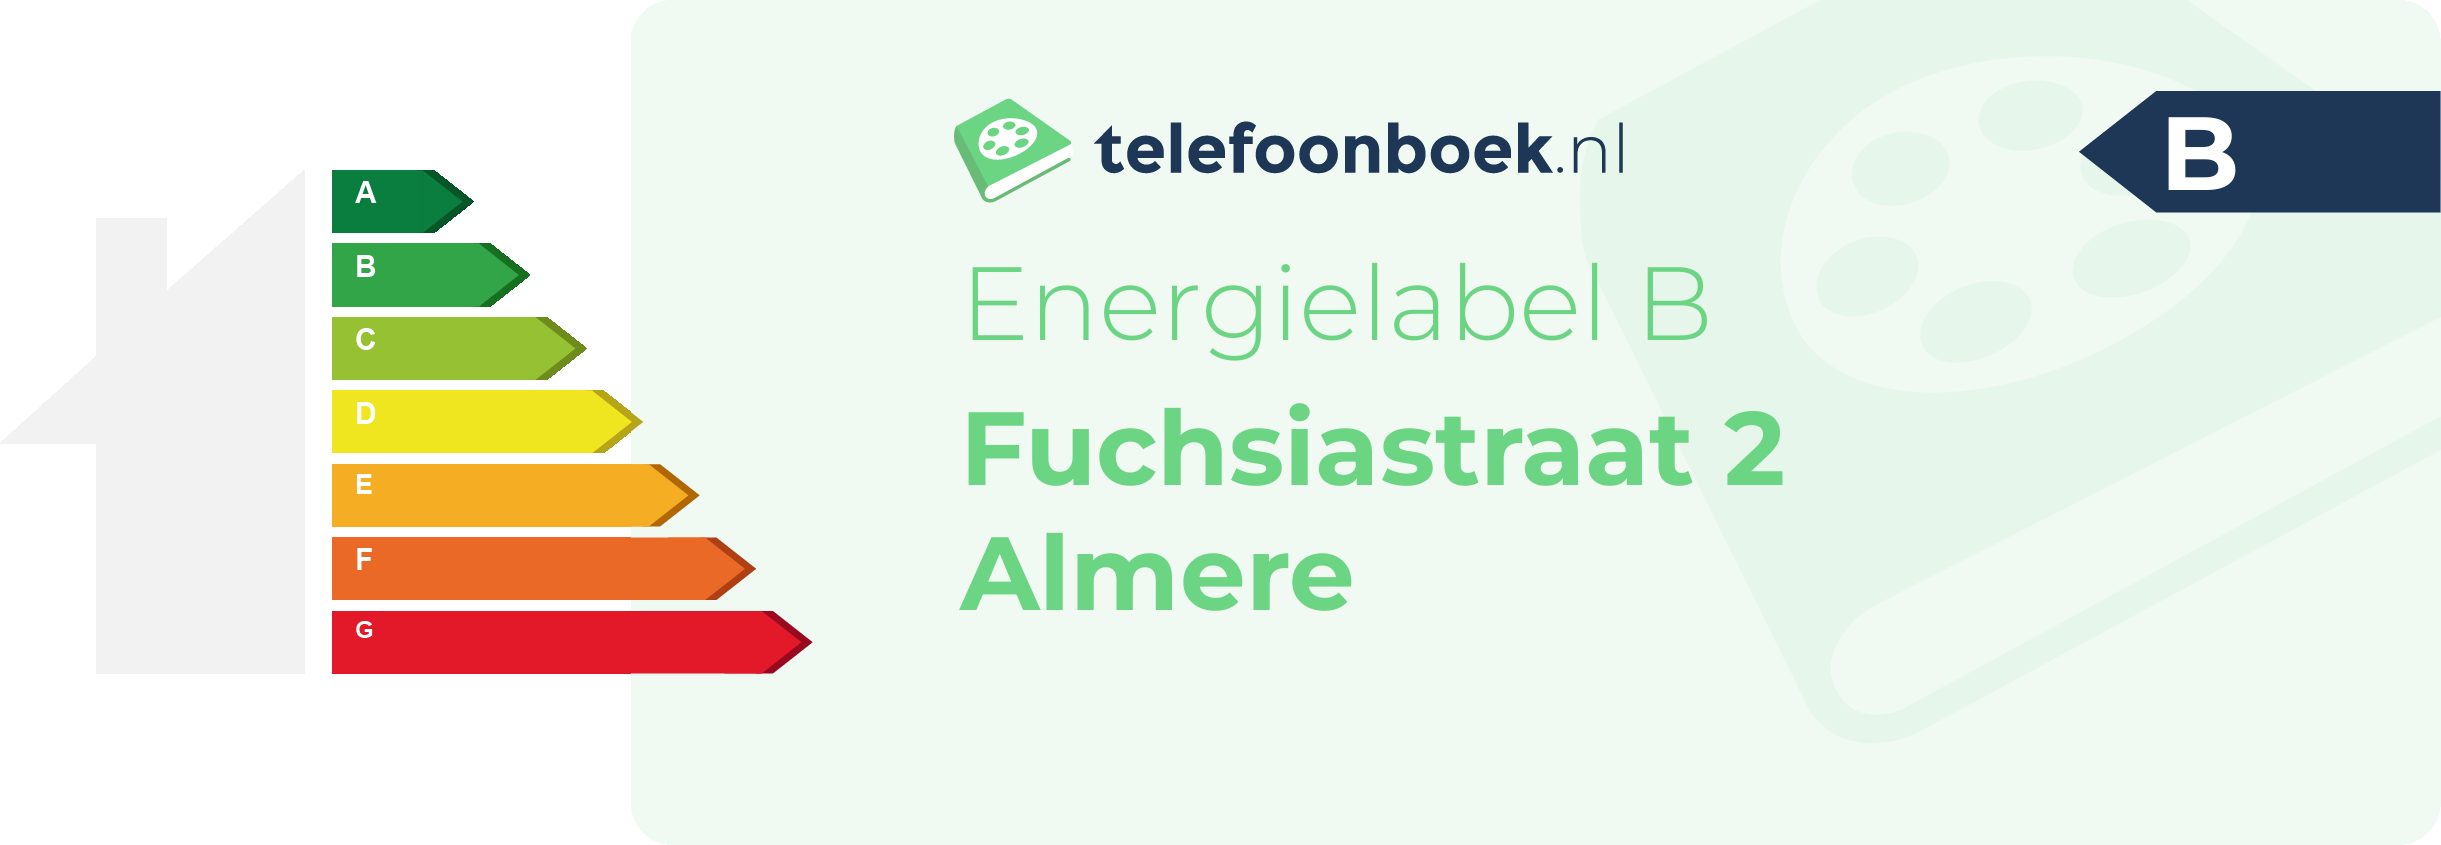 Energielabel Fuchsiastraat 2 Almere